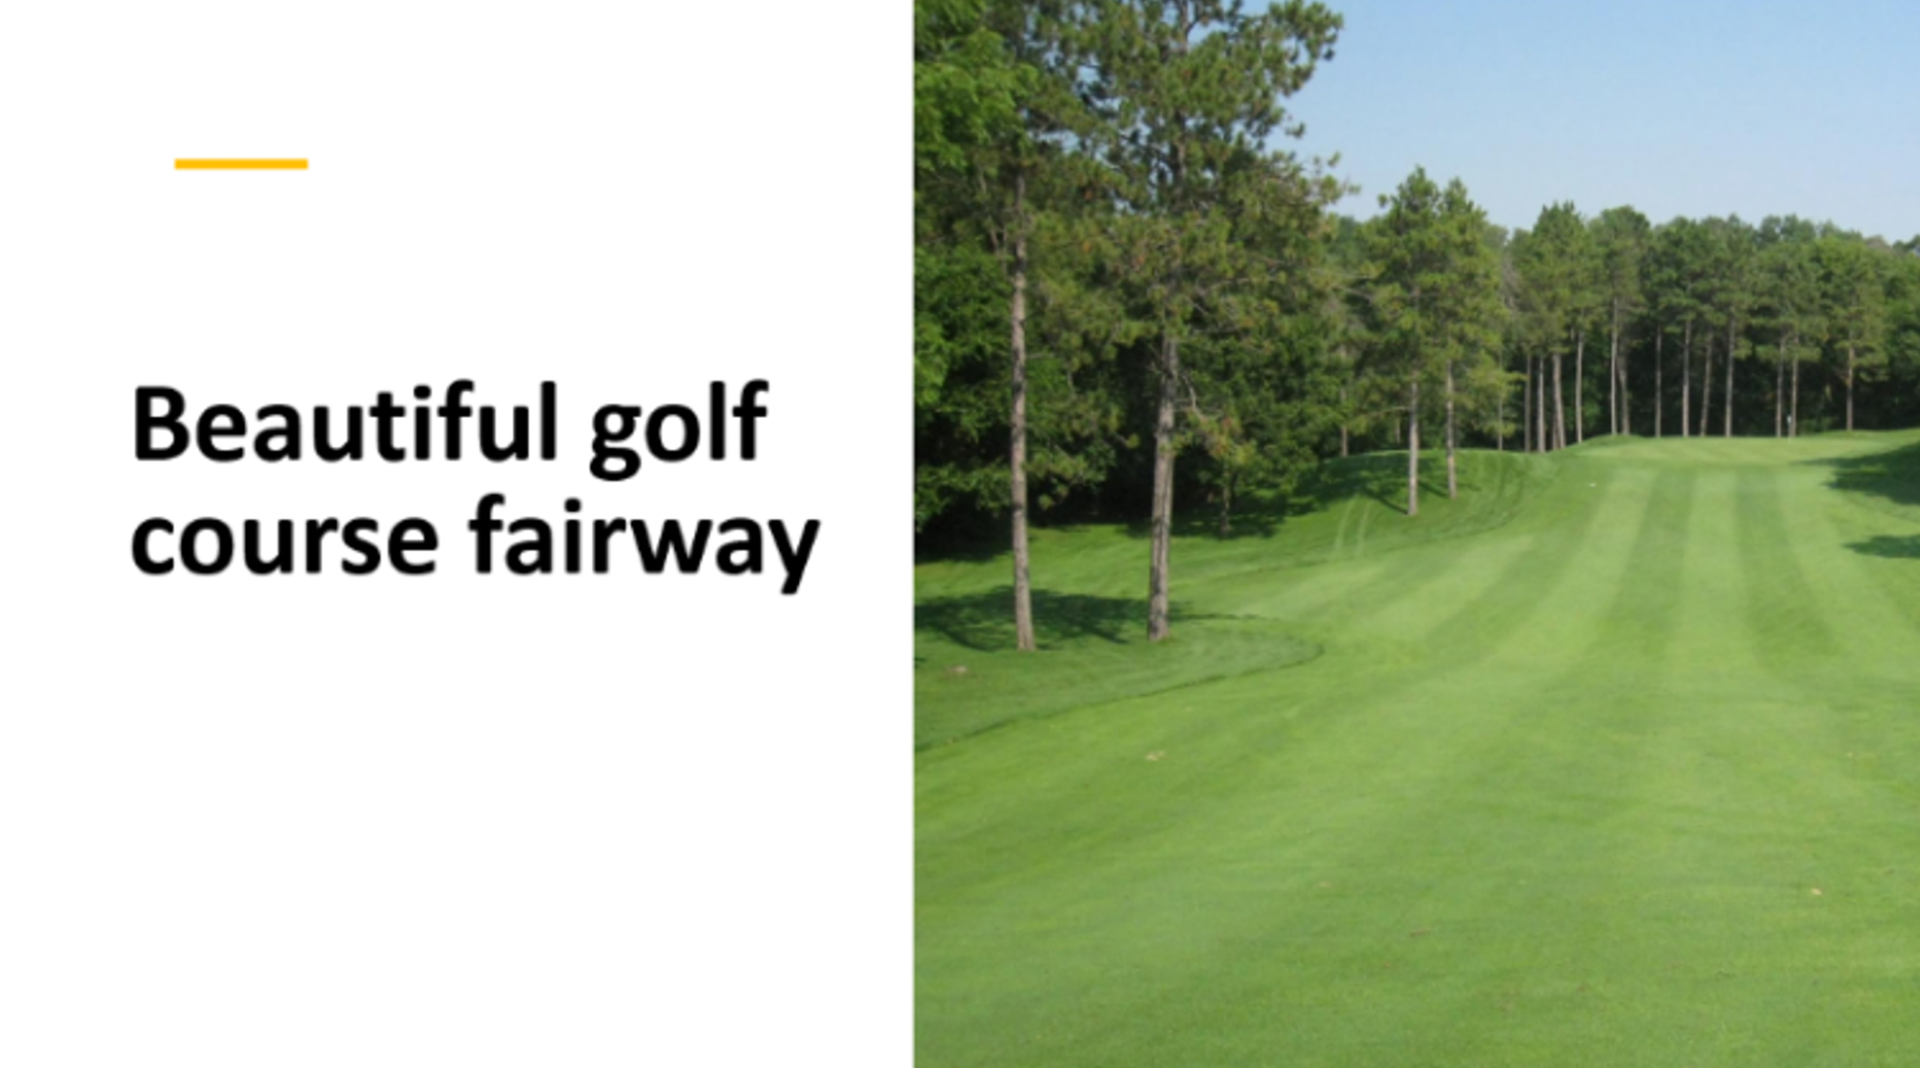 Golf course fairway